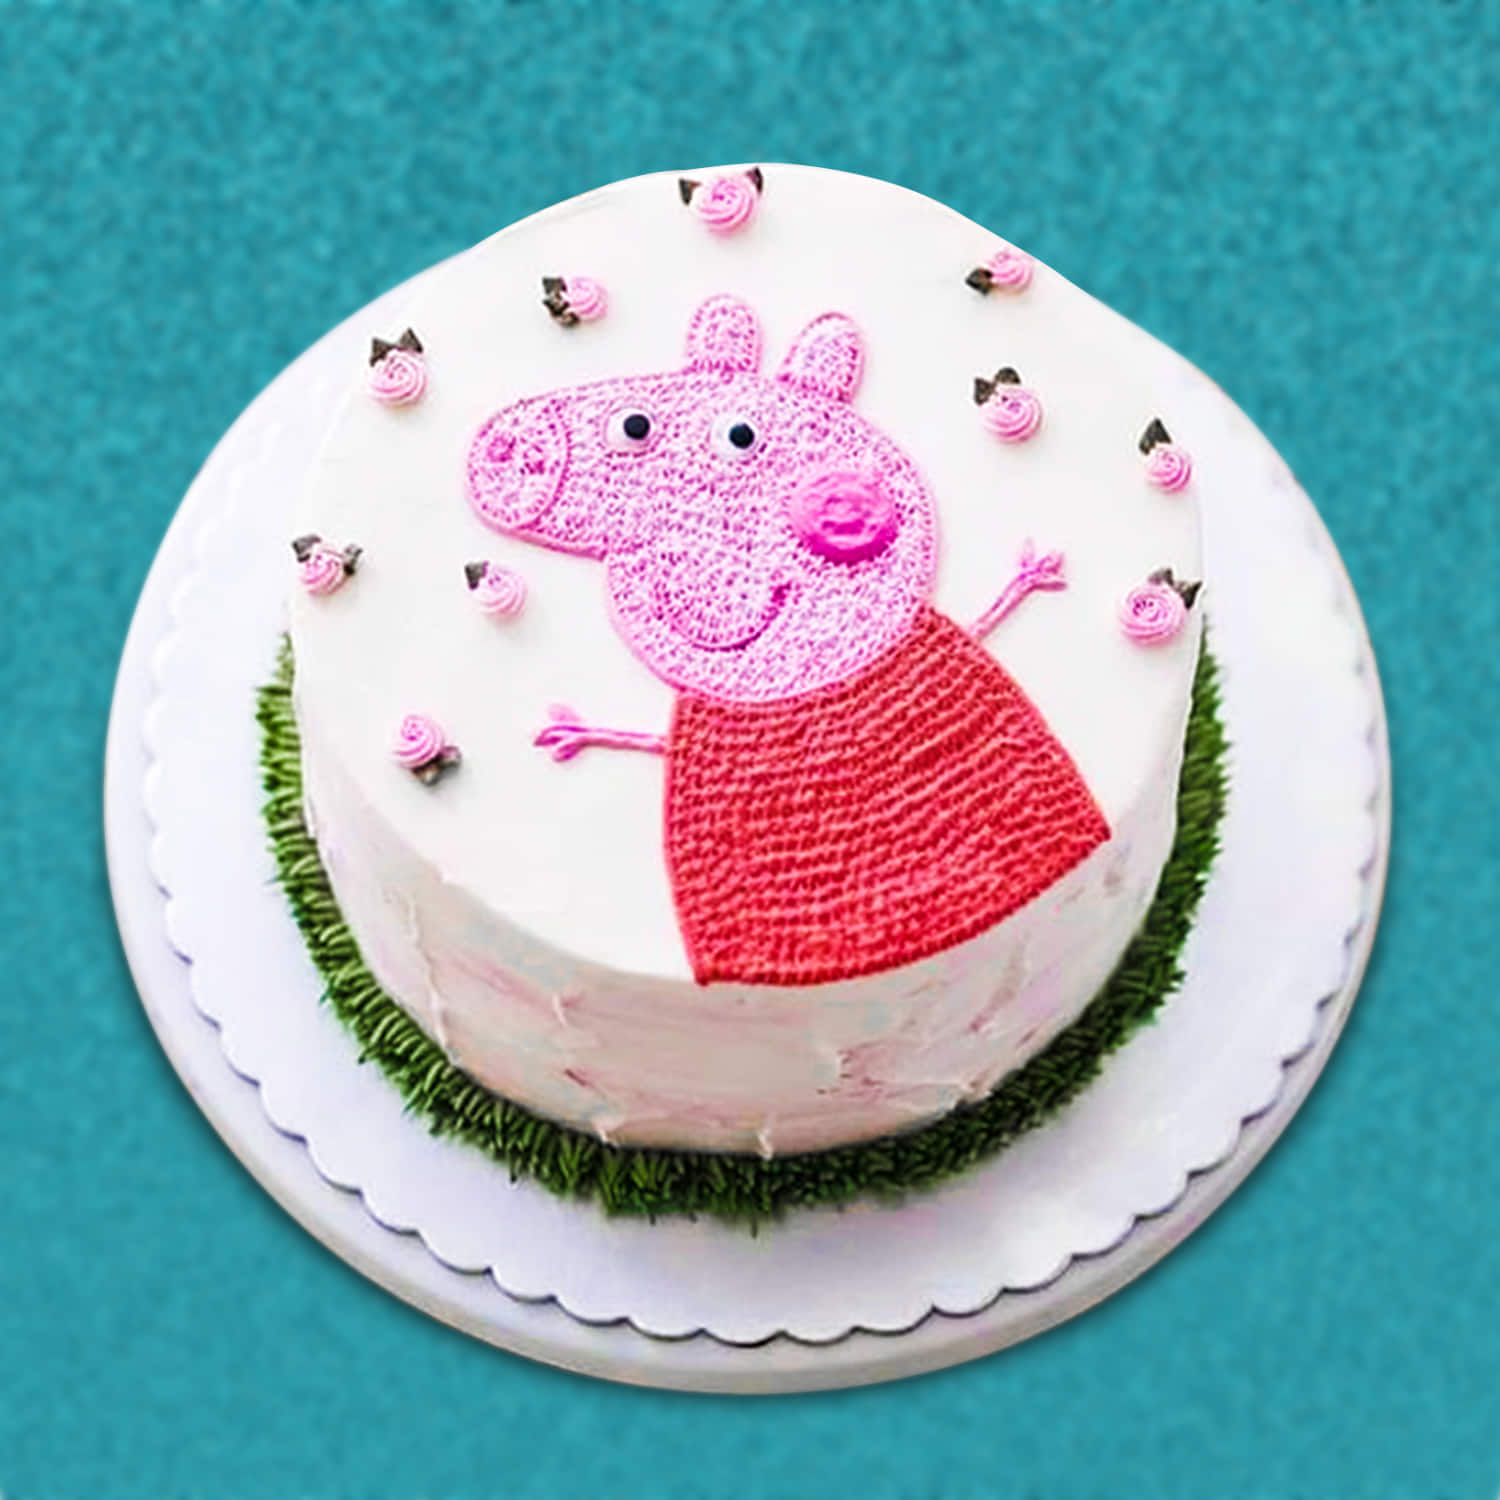 kids birthday cake london – Etoile Bakery